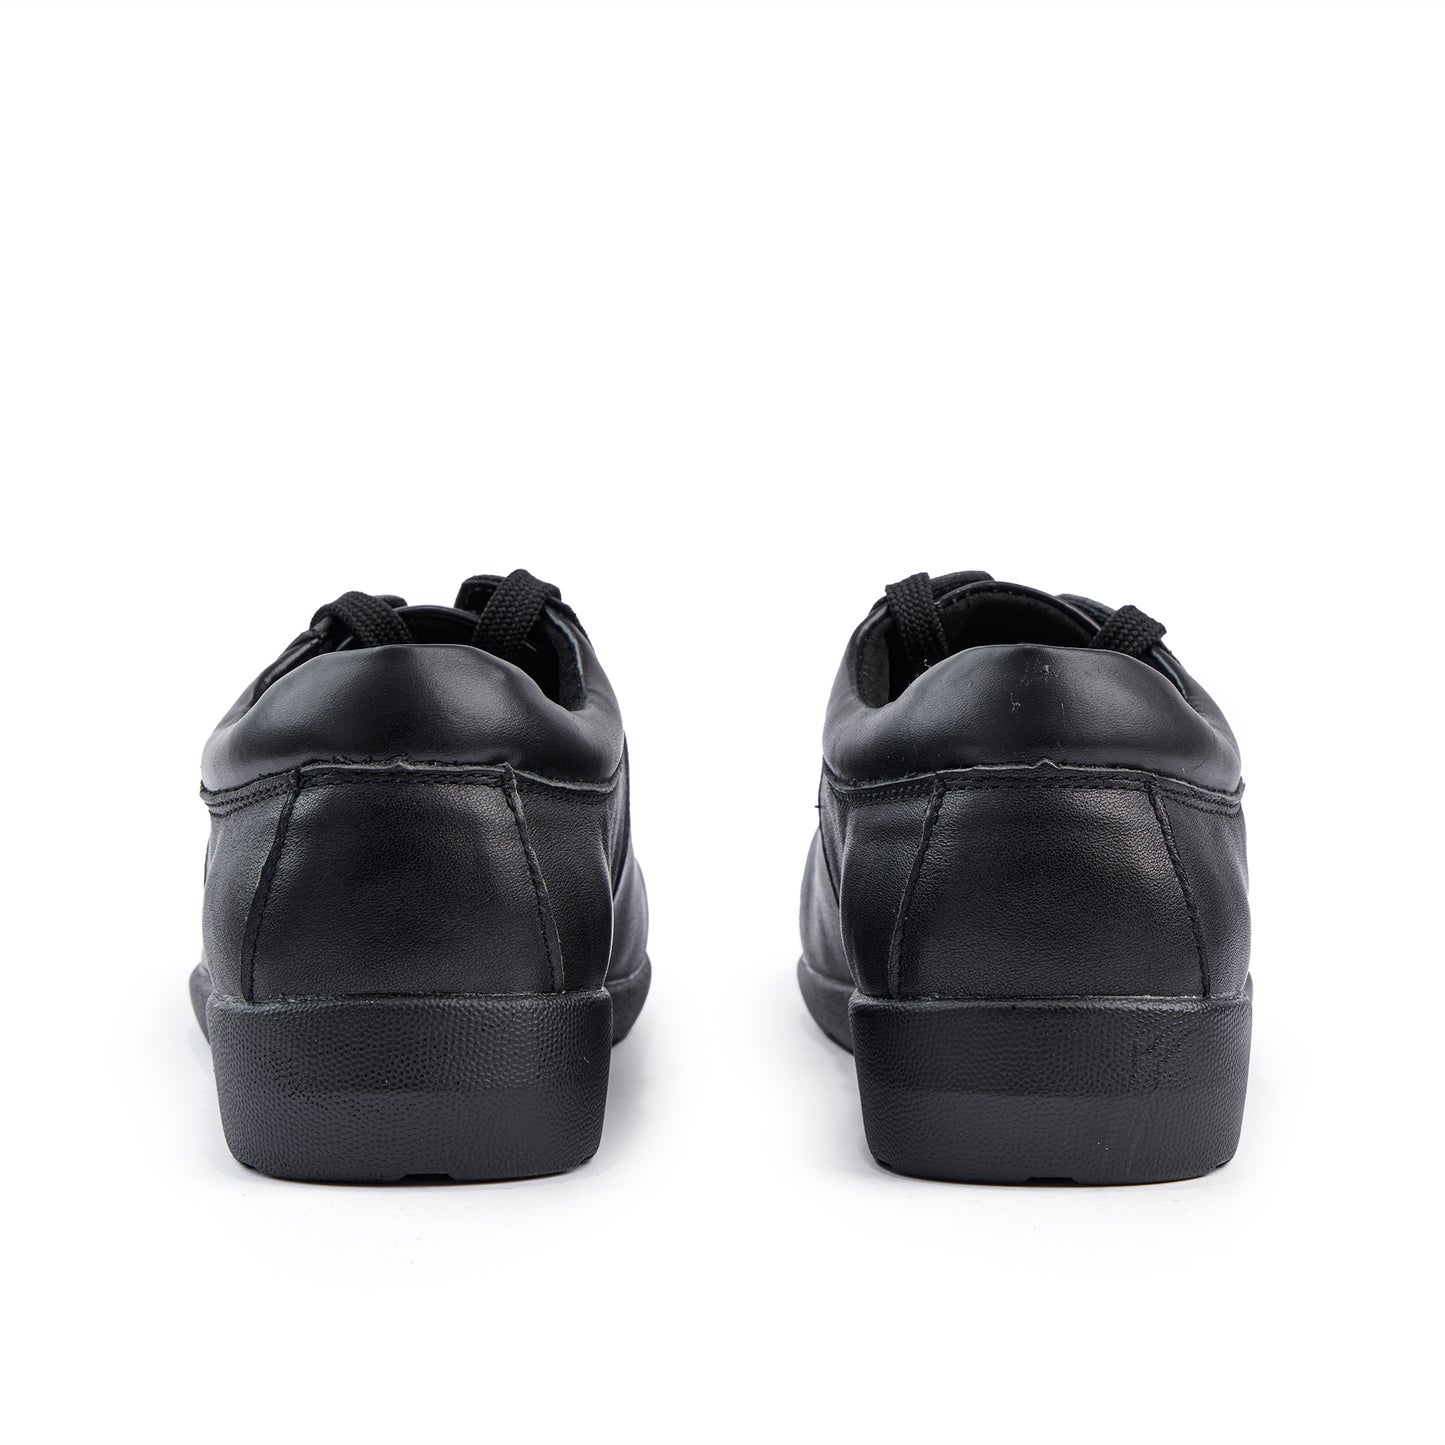 Emily Junior School Shoes - Black